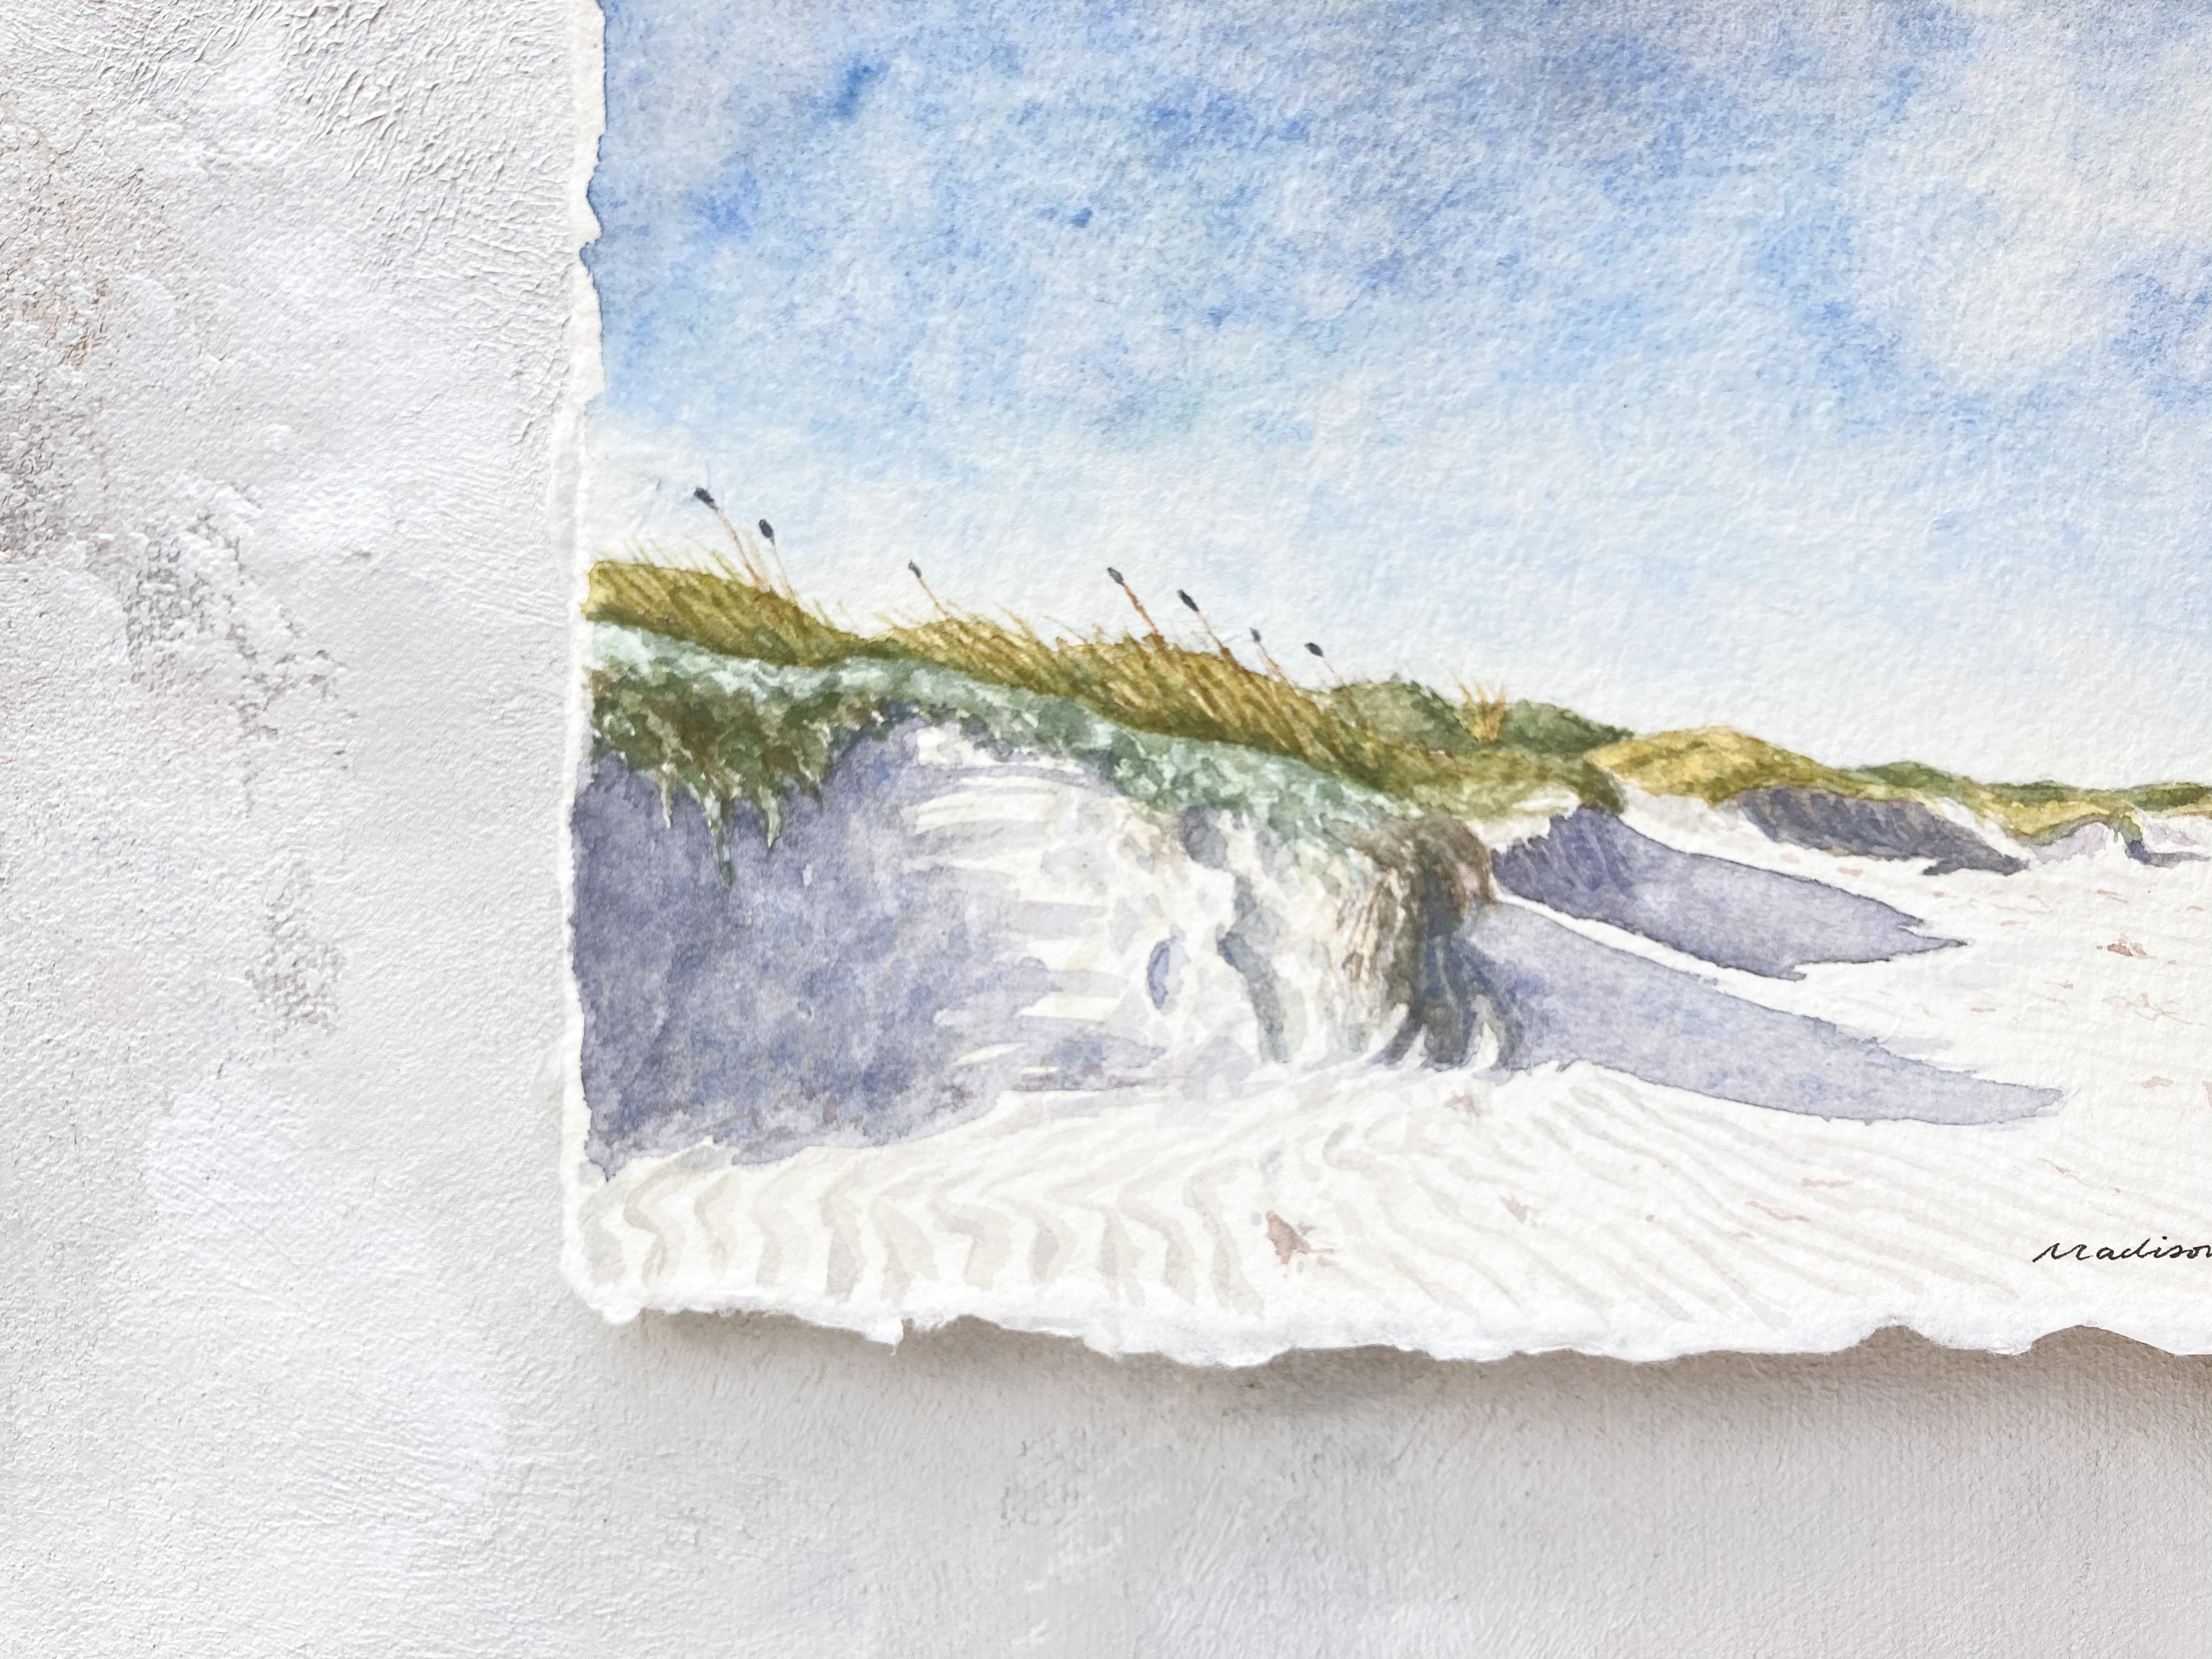 5x7 original watercolor, sand dunes, detail, deckled edge, handmade paper